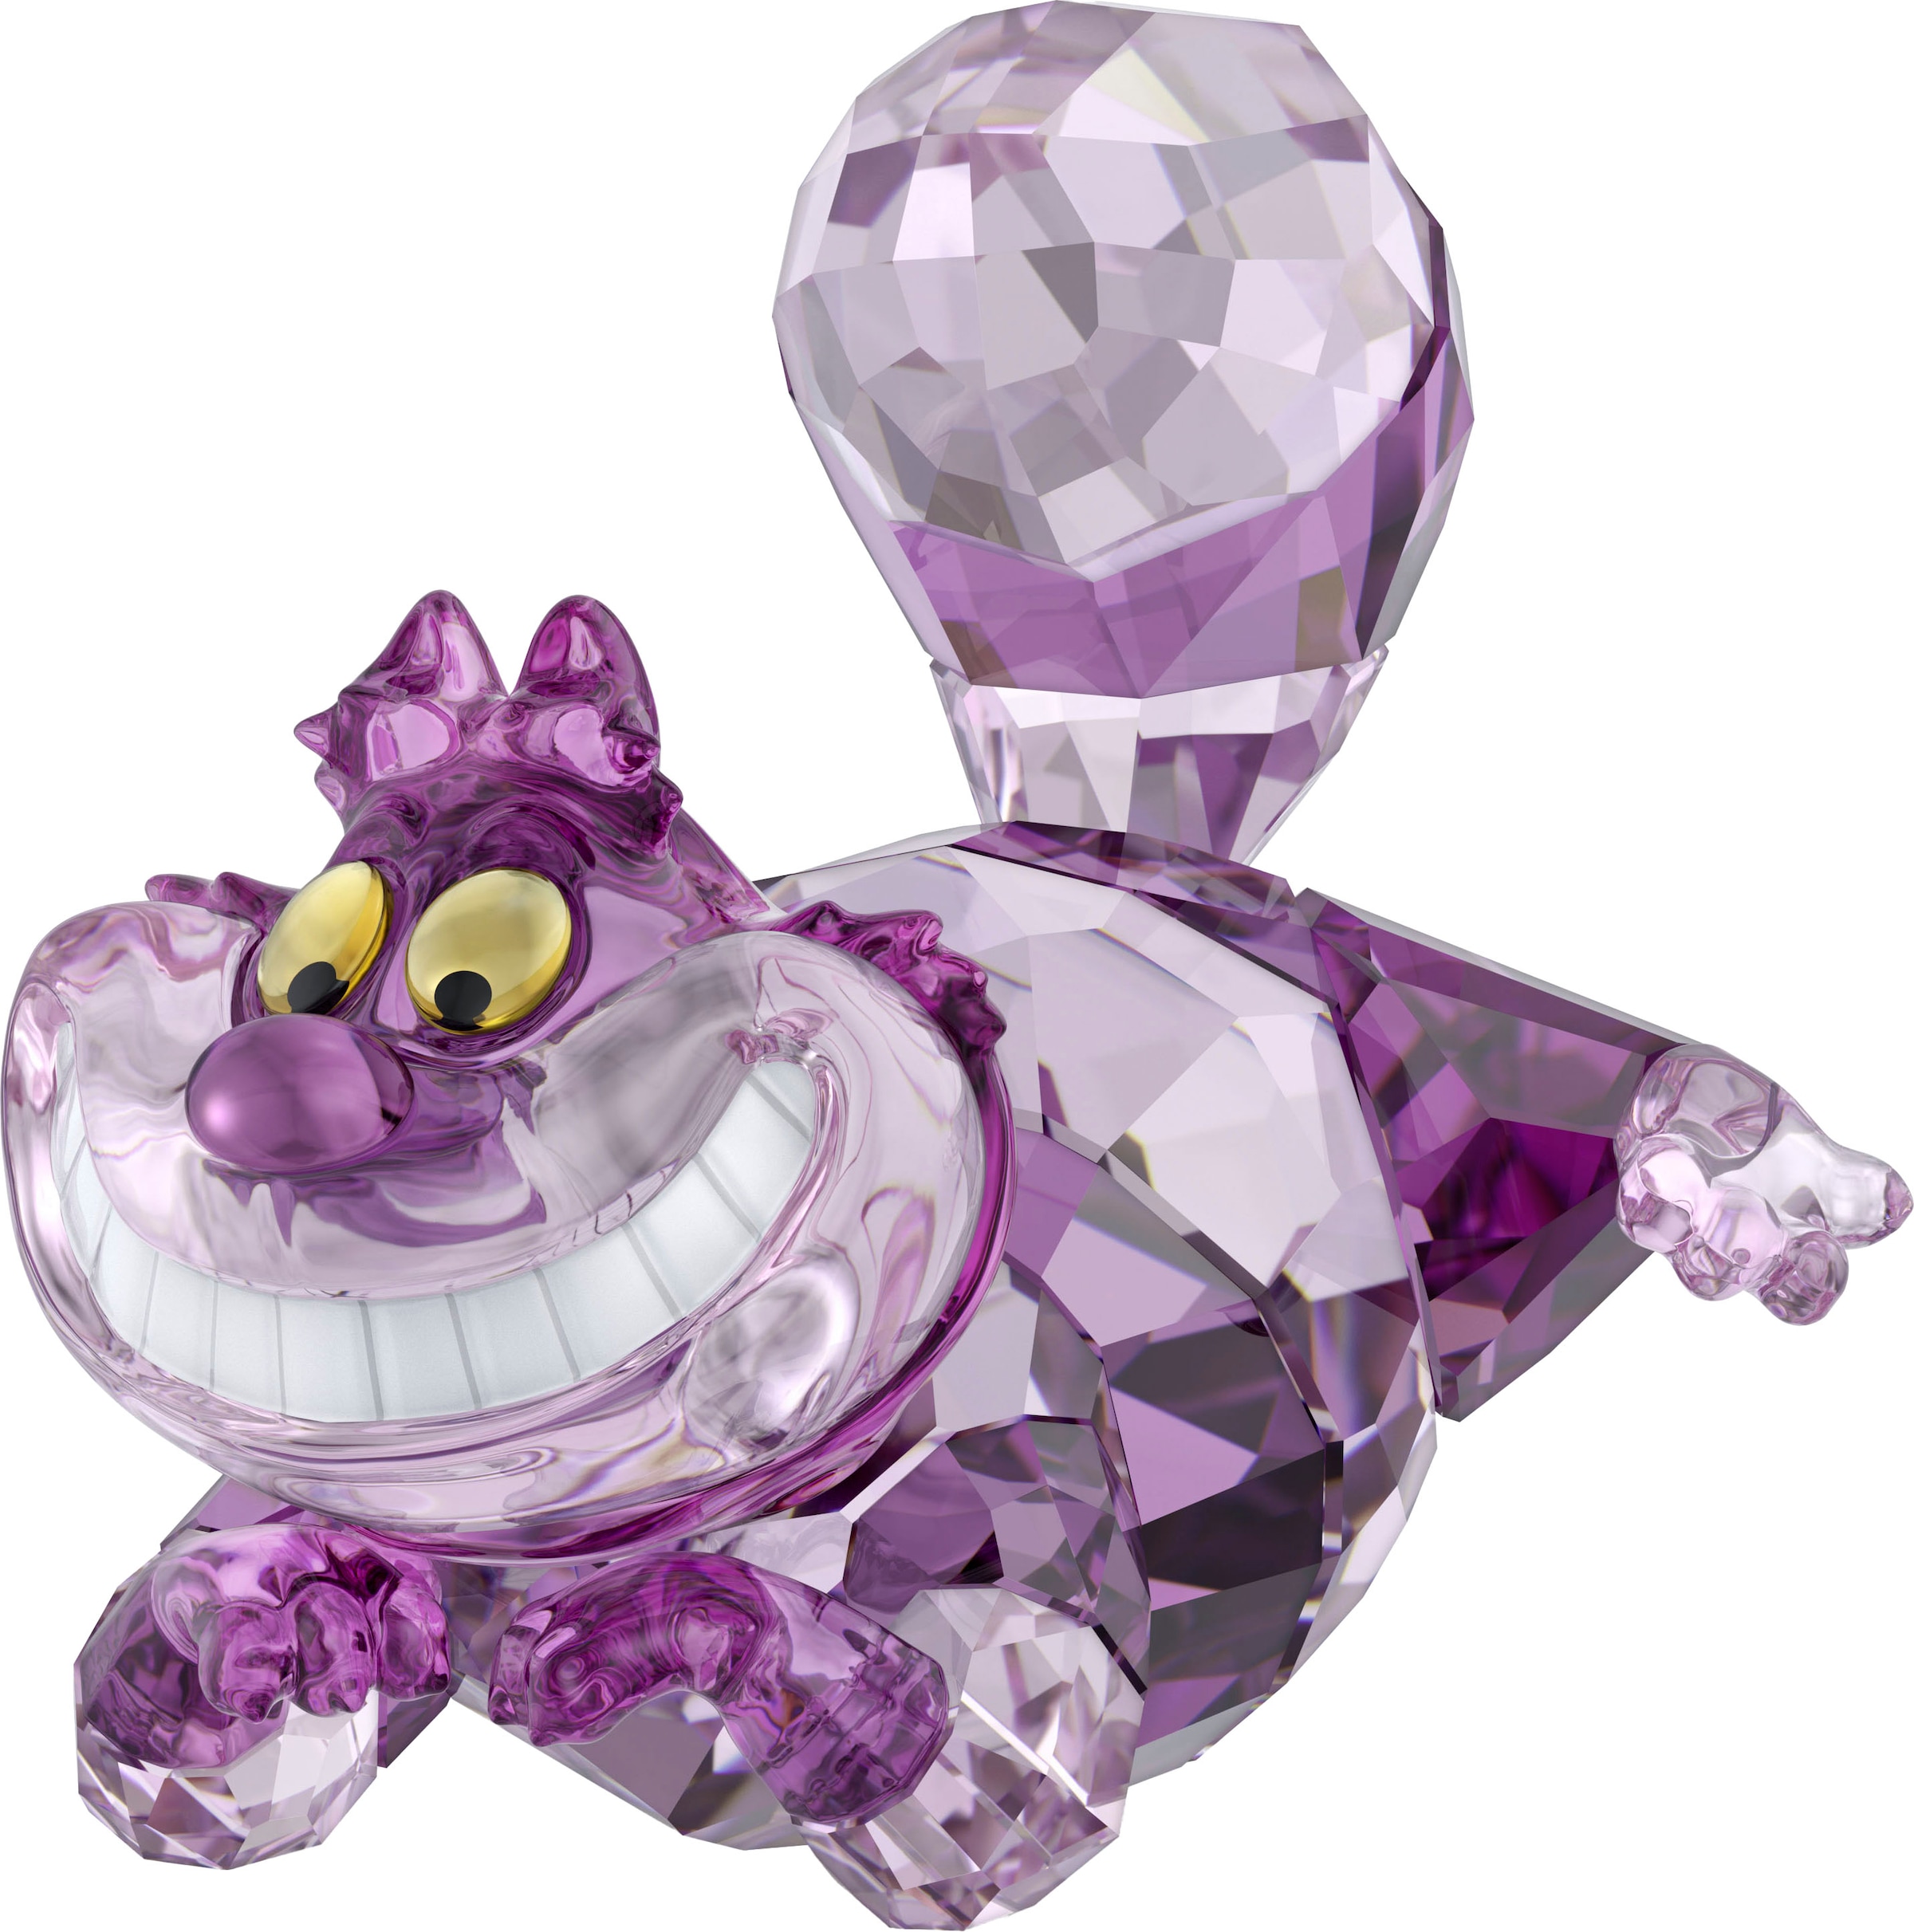 Swarovski Dekofigur »Kristallfigur Sammelfigur Alice Cheshire Cat Grinsekatze, 5668073«, Swarovski® Kristall